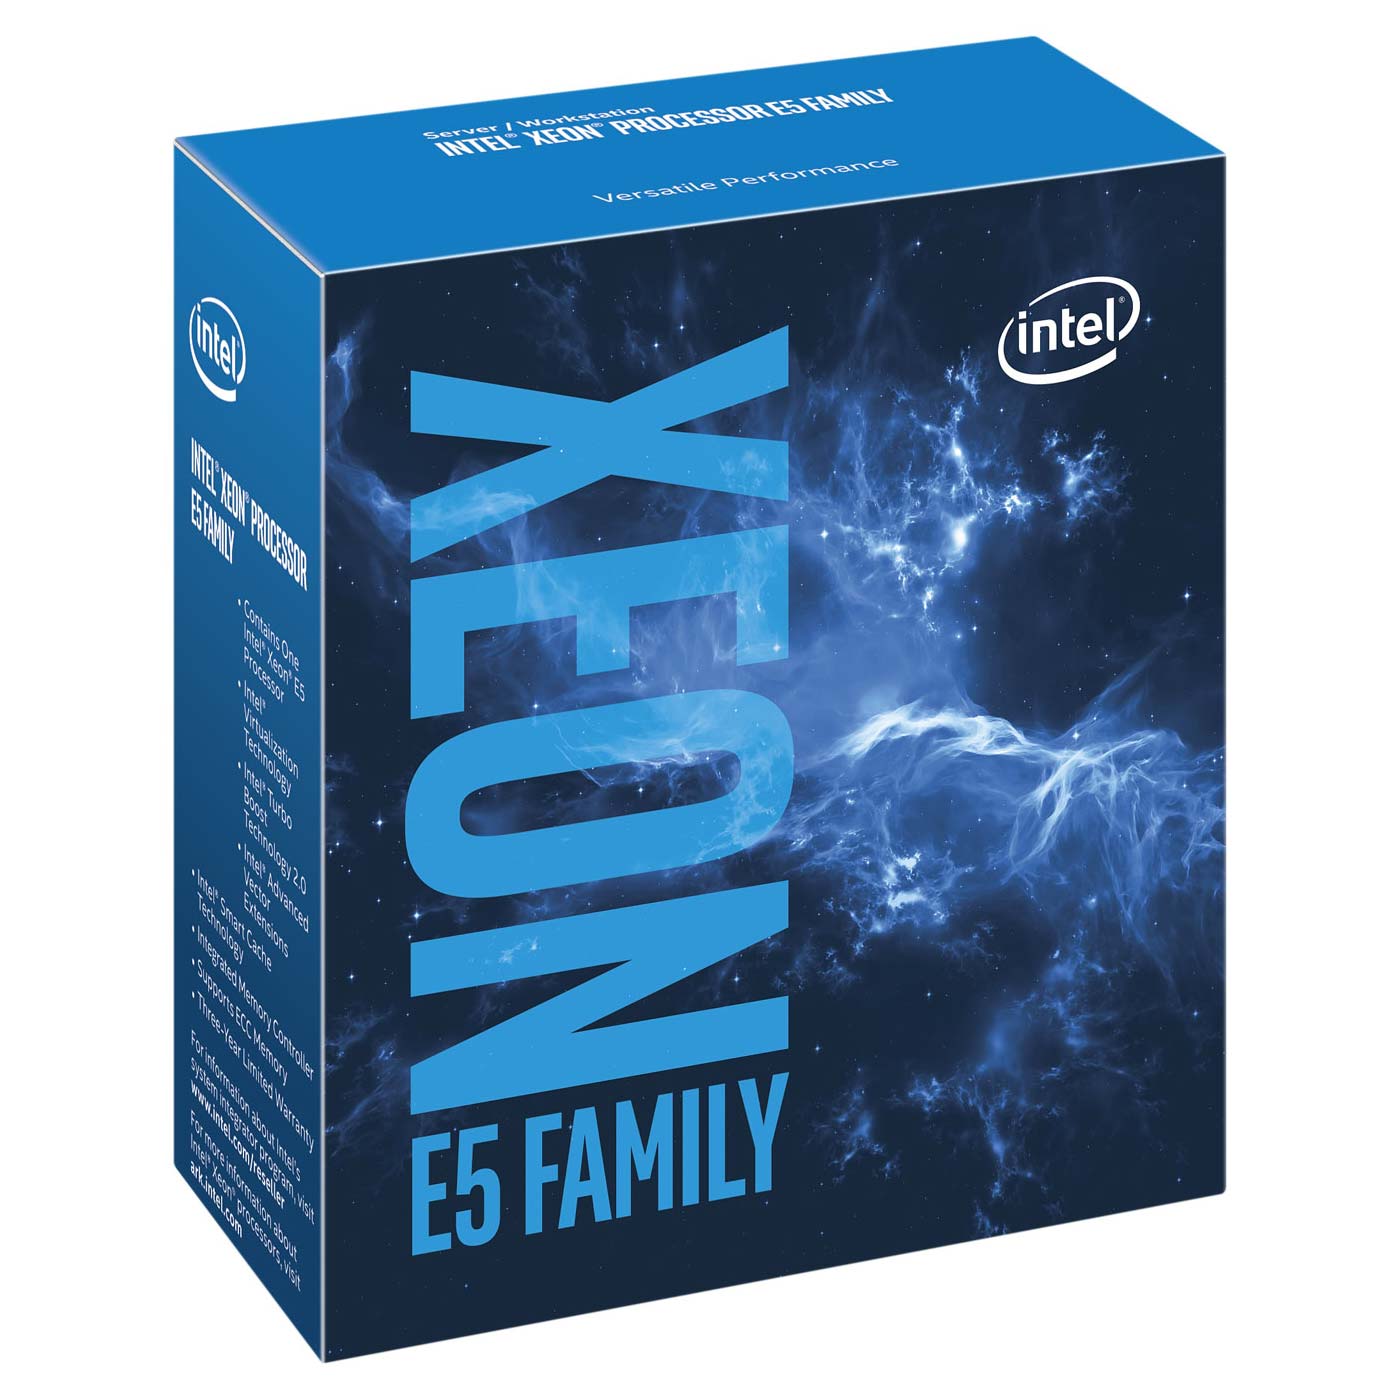 Intel Xeon E5-2699 V4 (2.2 GHz, 55M Cache, LGA2011-3) box